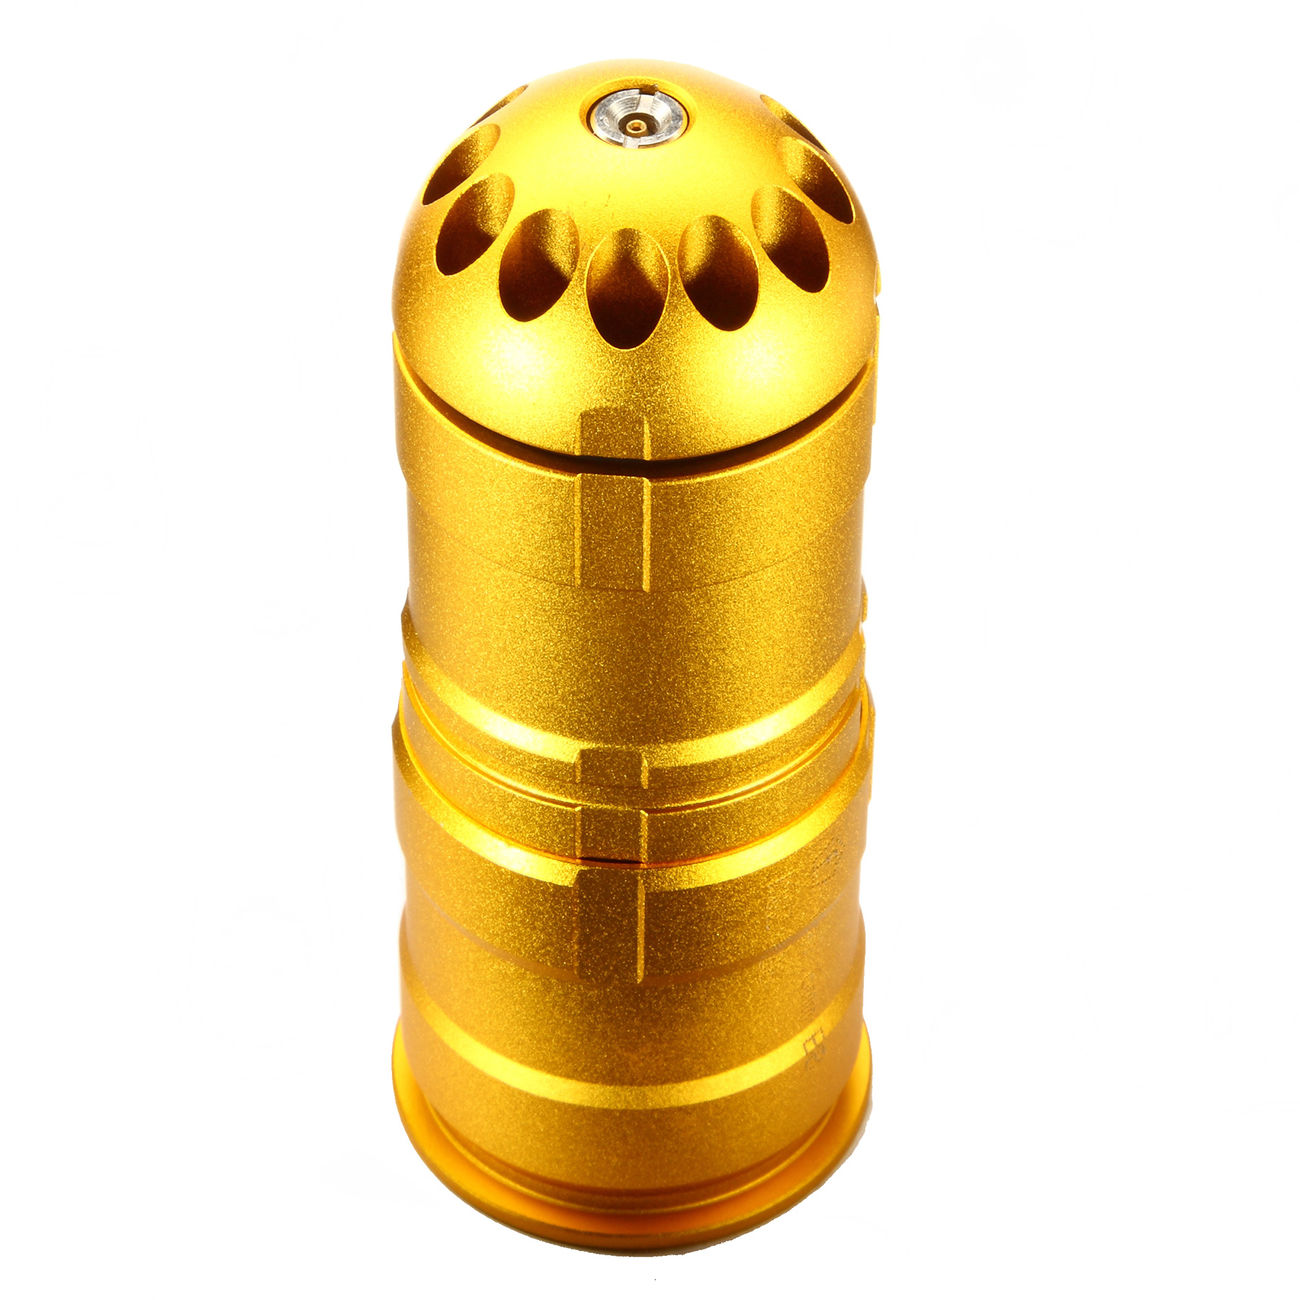 MadBull M922A1 40mm Vollmetall Hülse / Einlegepatrone f. 120 6mm BBs gold Bild 1